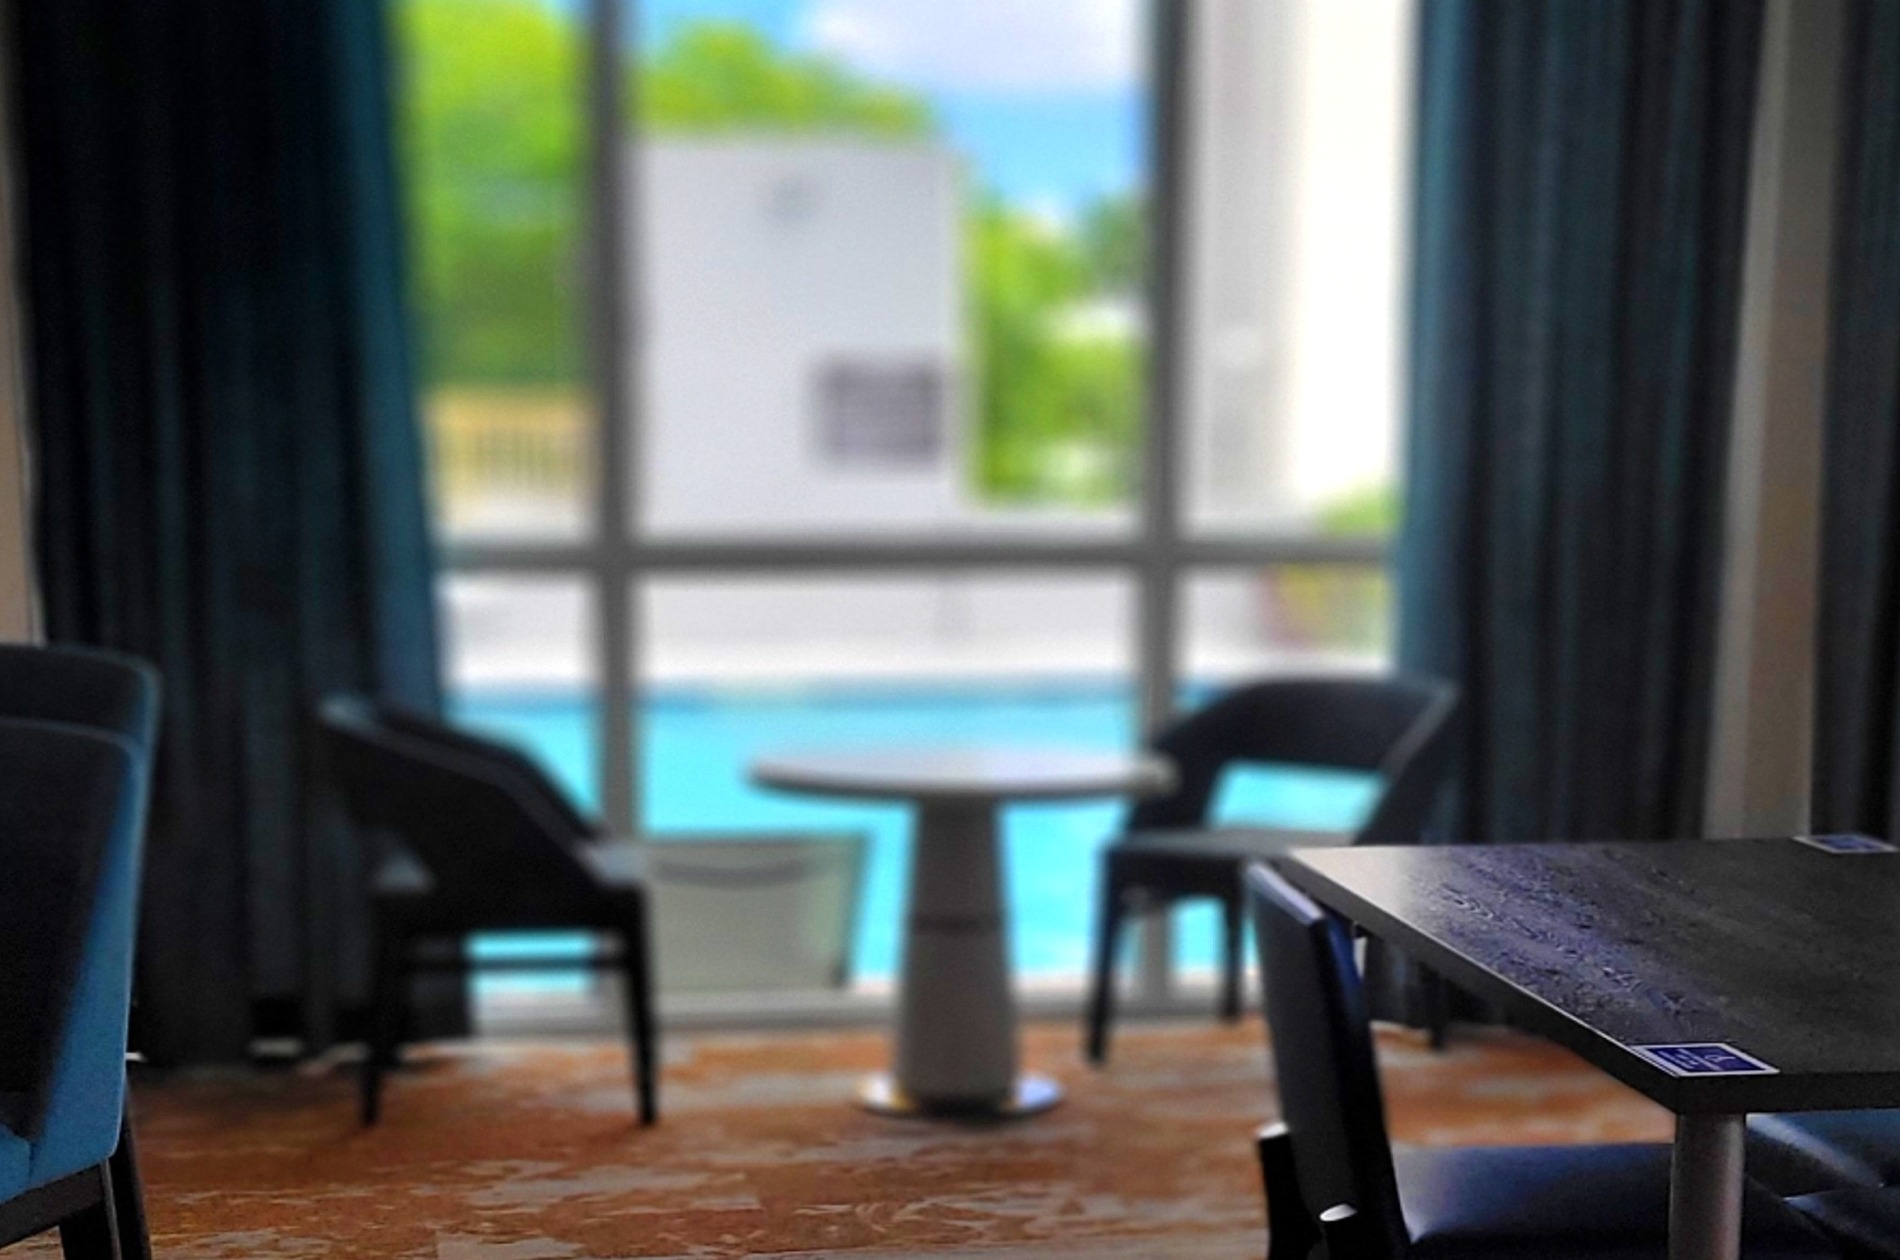 Hampton Inn & Suites by Hilton Miami Airport South / Blue Lagoon - Breakfast Area